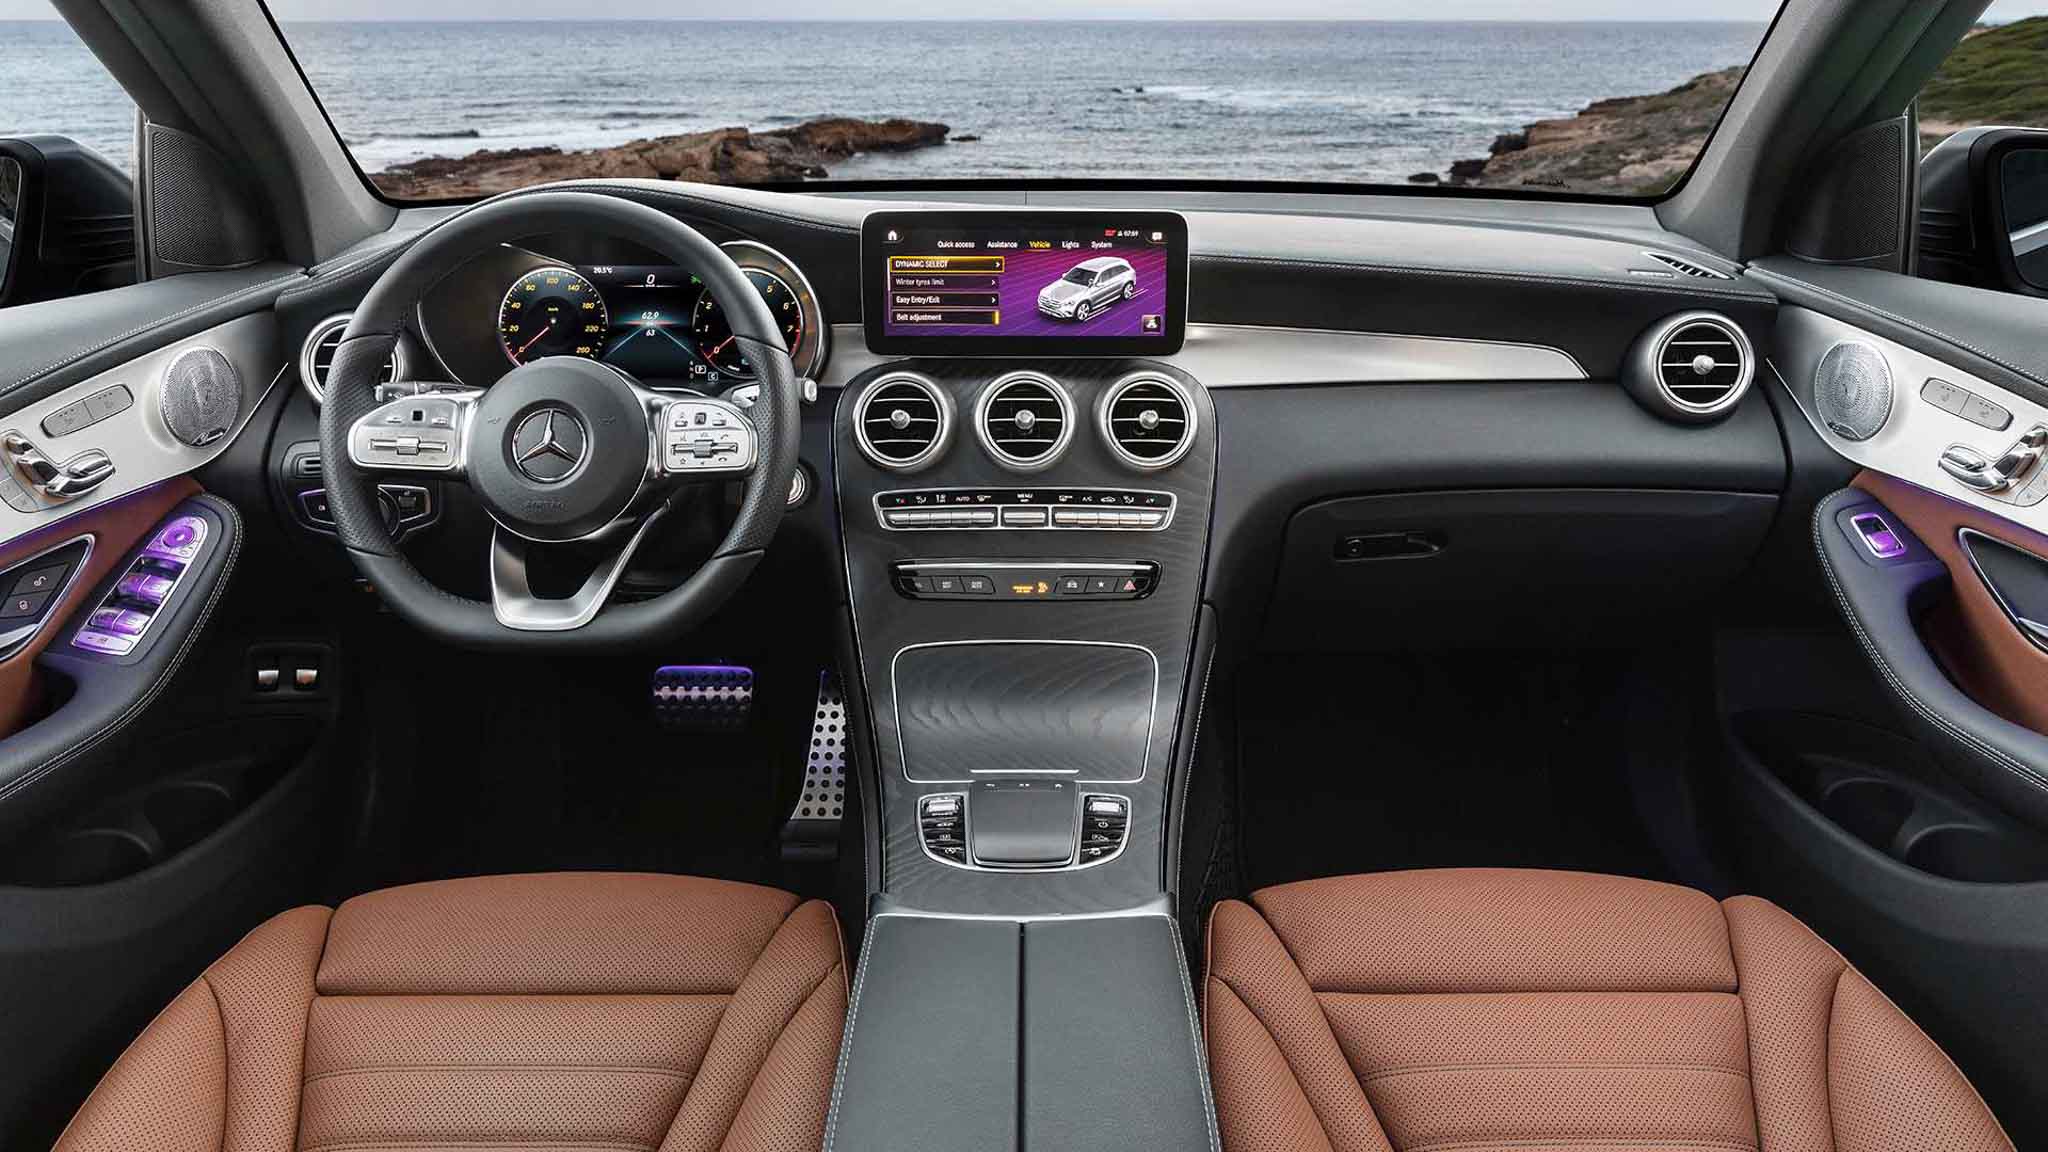 MercedesBenz GLC 2020 facelift ra mắt với nhiều nâng cấp  DoanhnhanPlusvn